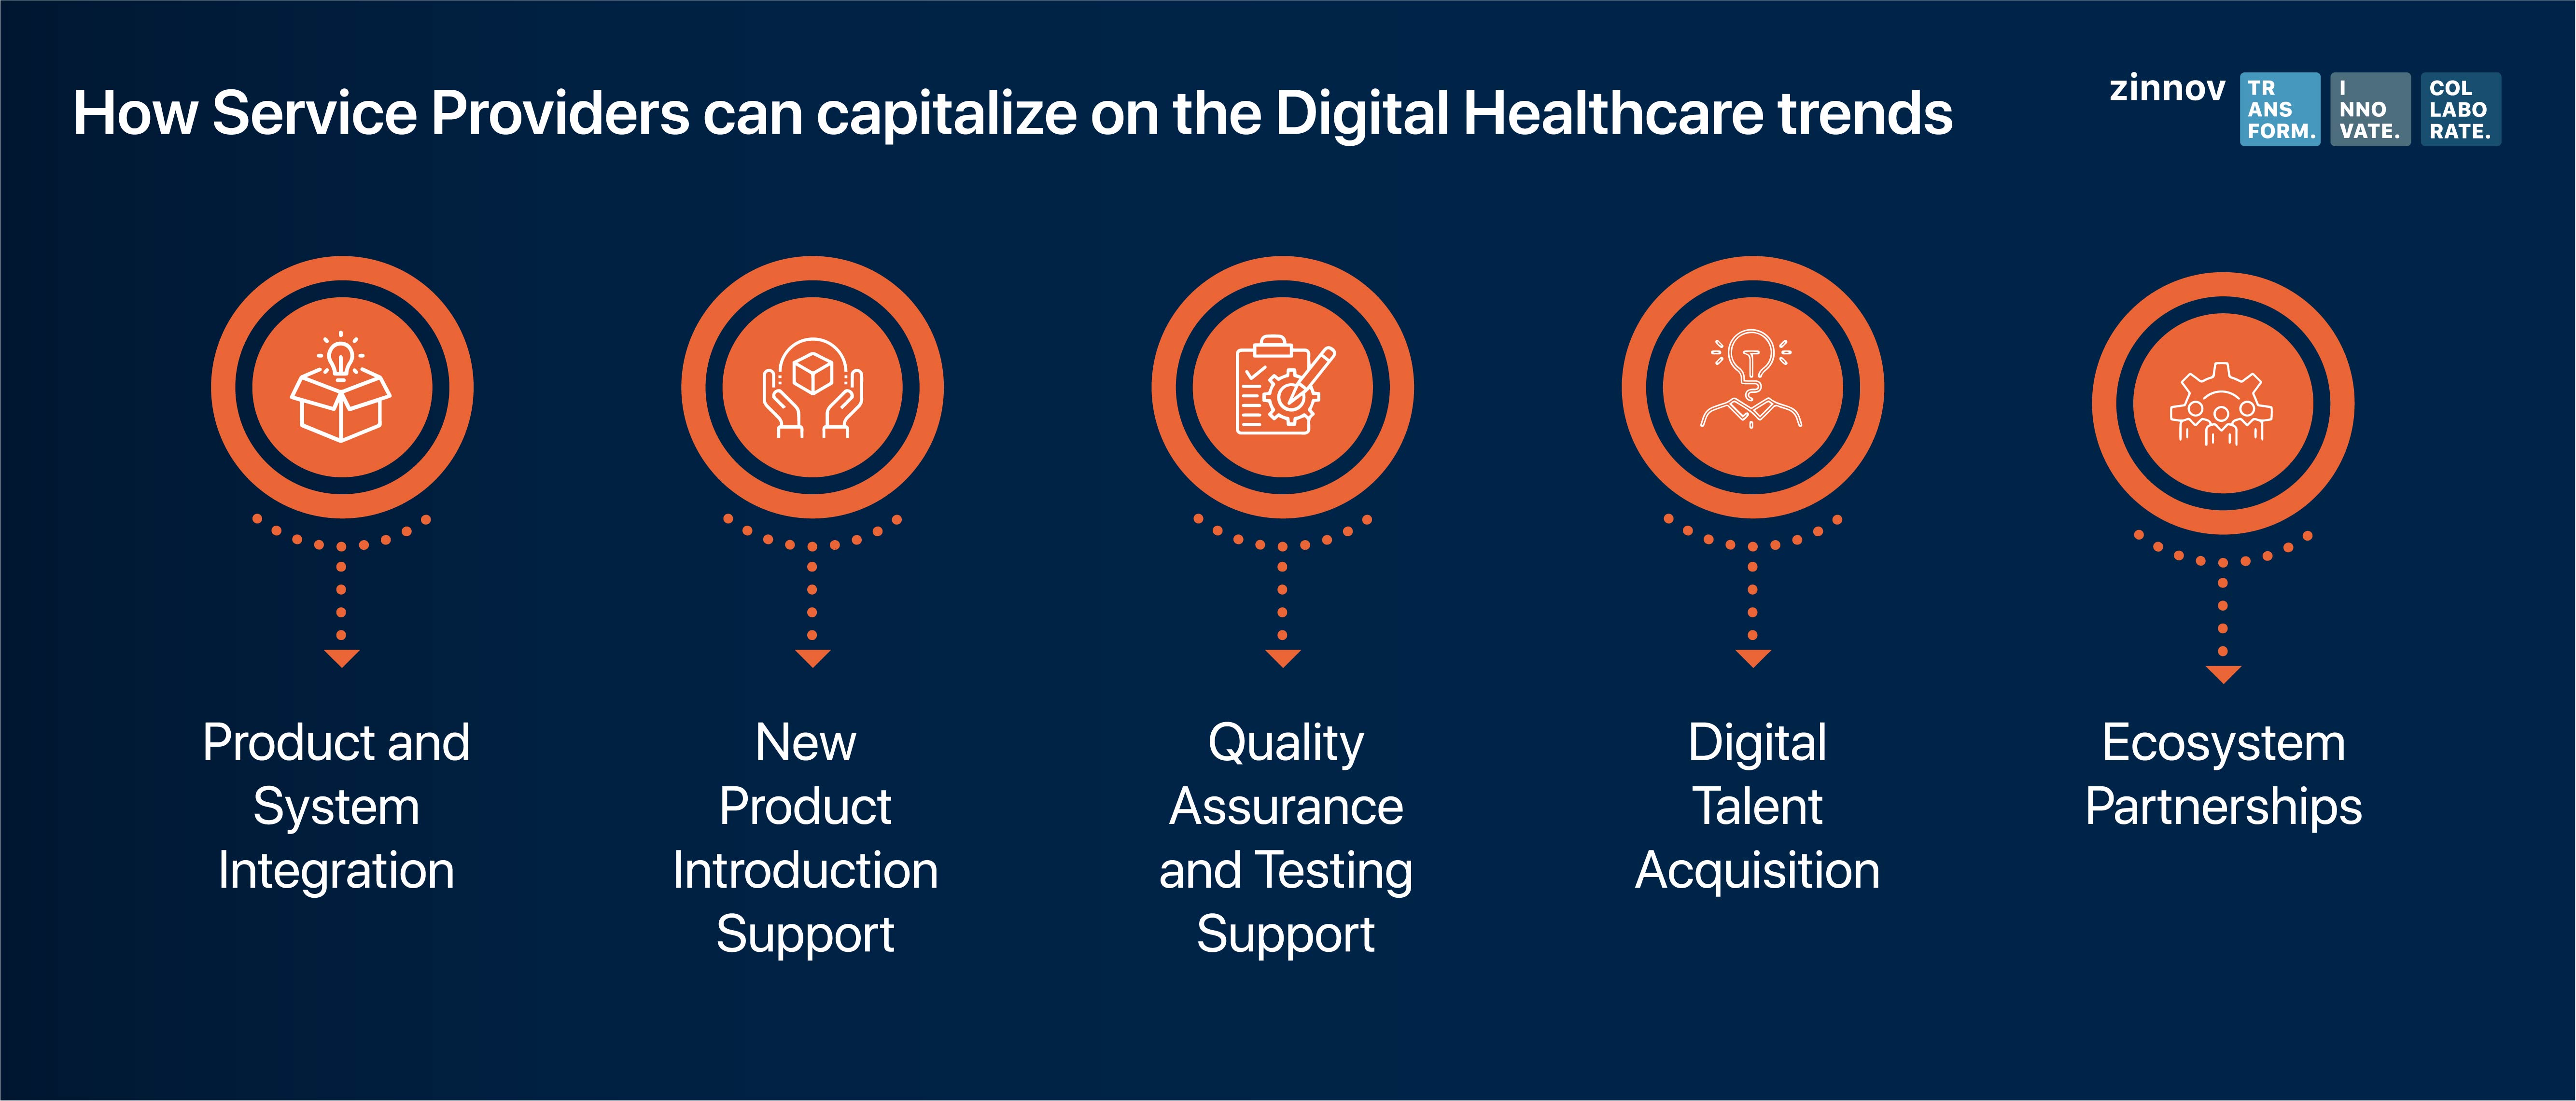 Digital Healthcare trends